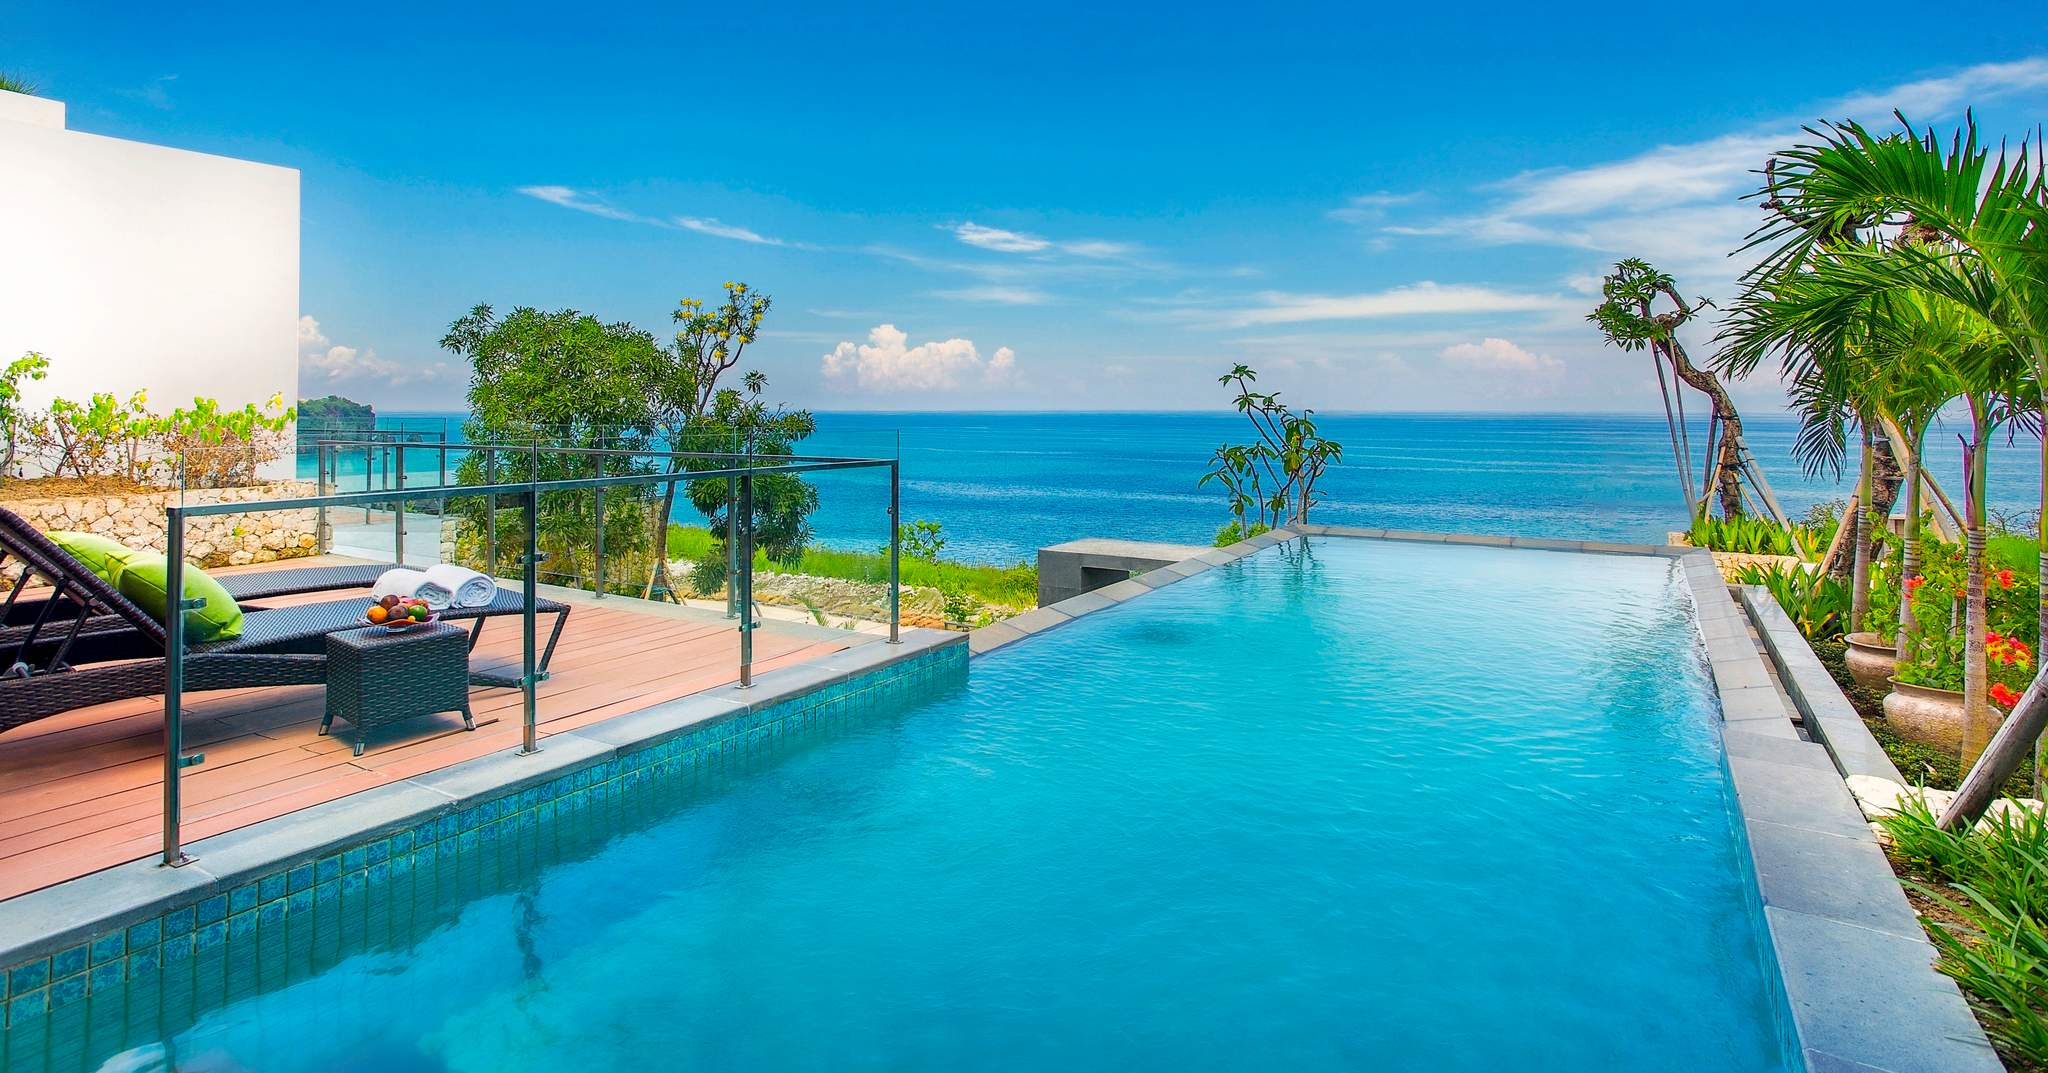 Anantara Bali Uluwatu Resort & Spa in Bali, Indonesia